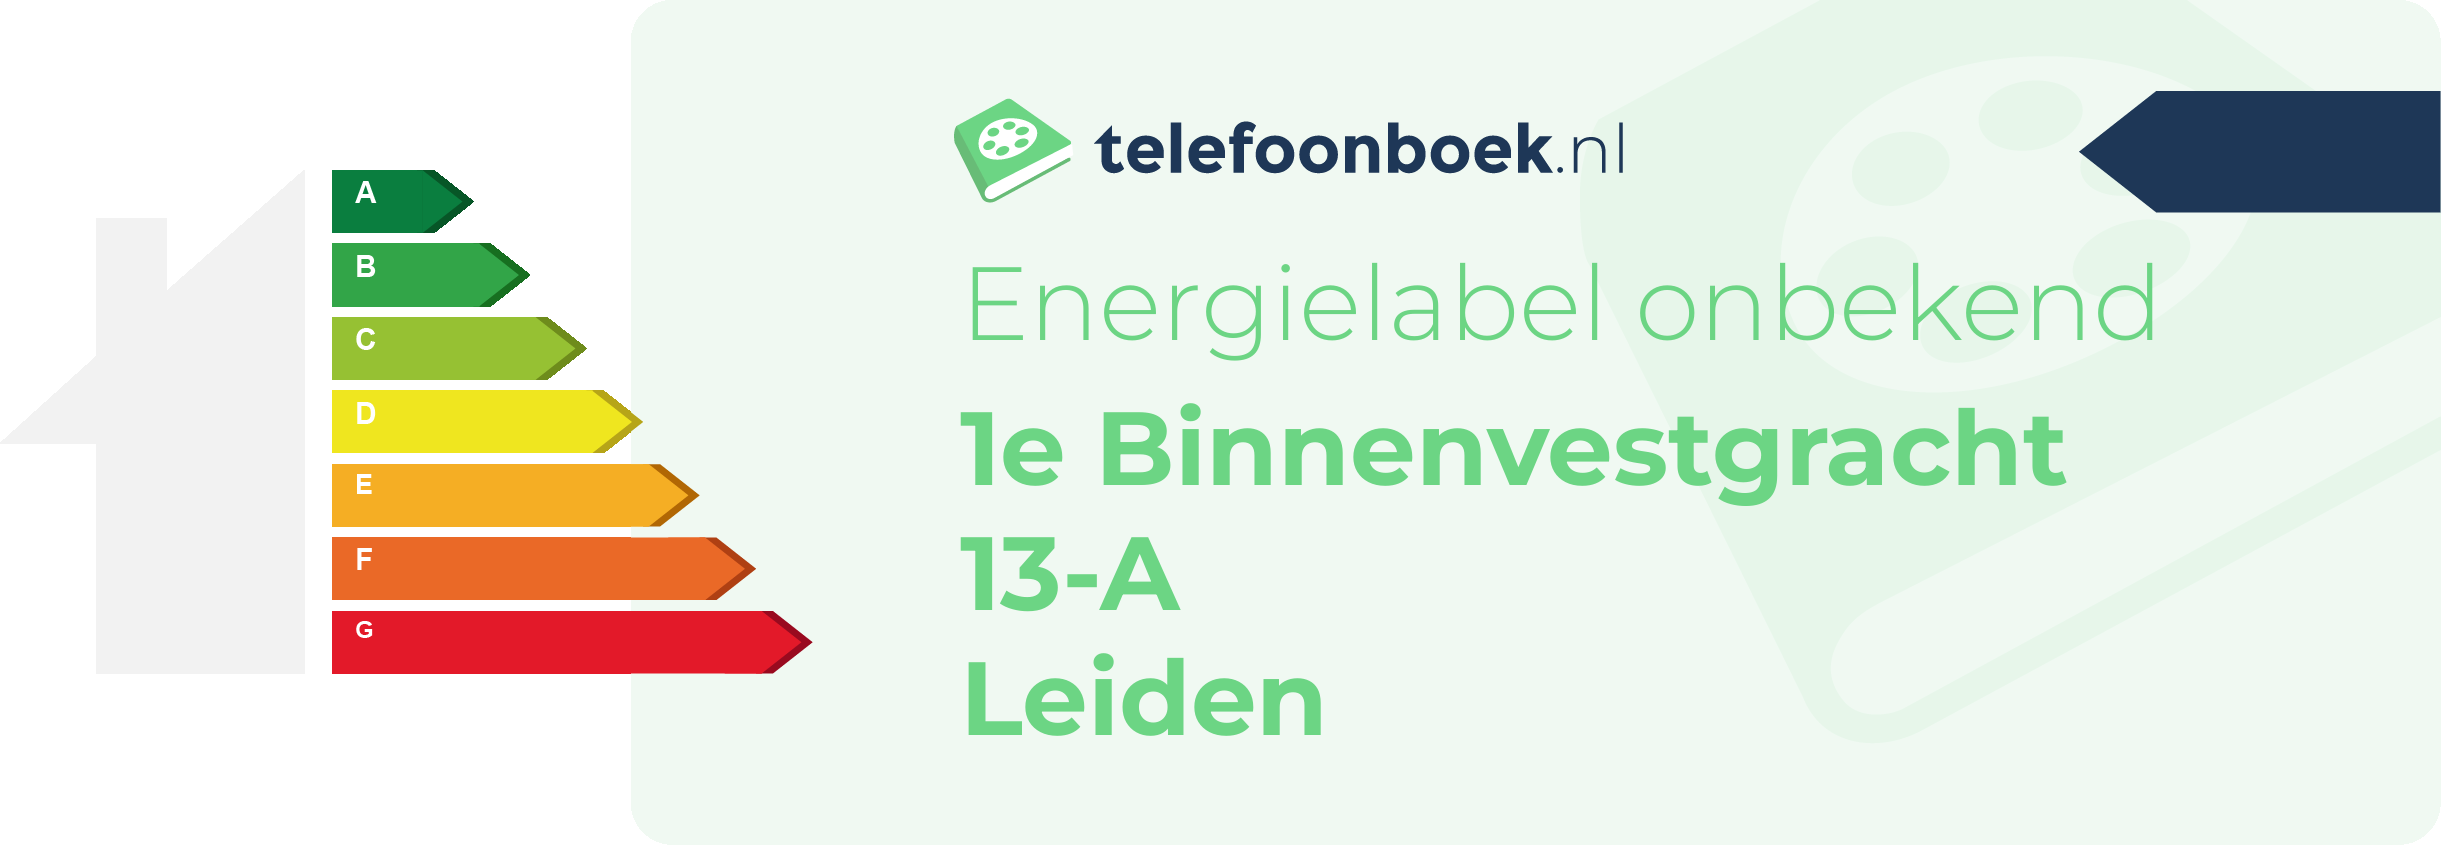 Energielabel 1e Binnenvestgracht 13-A Leiden